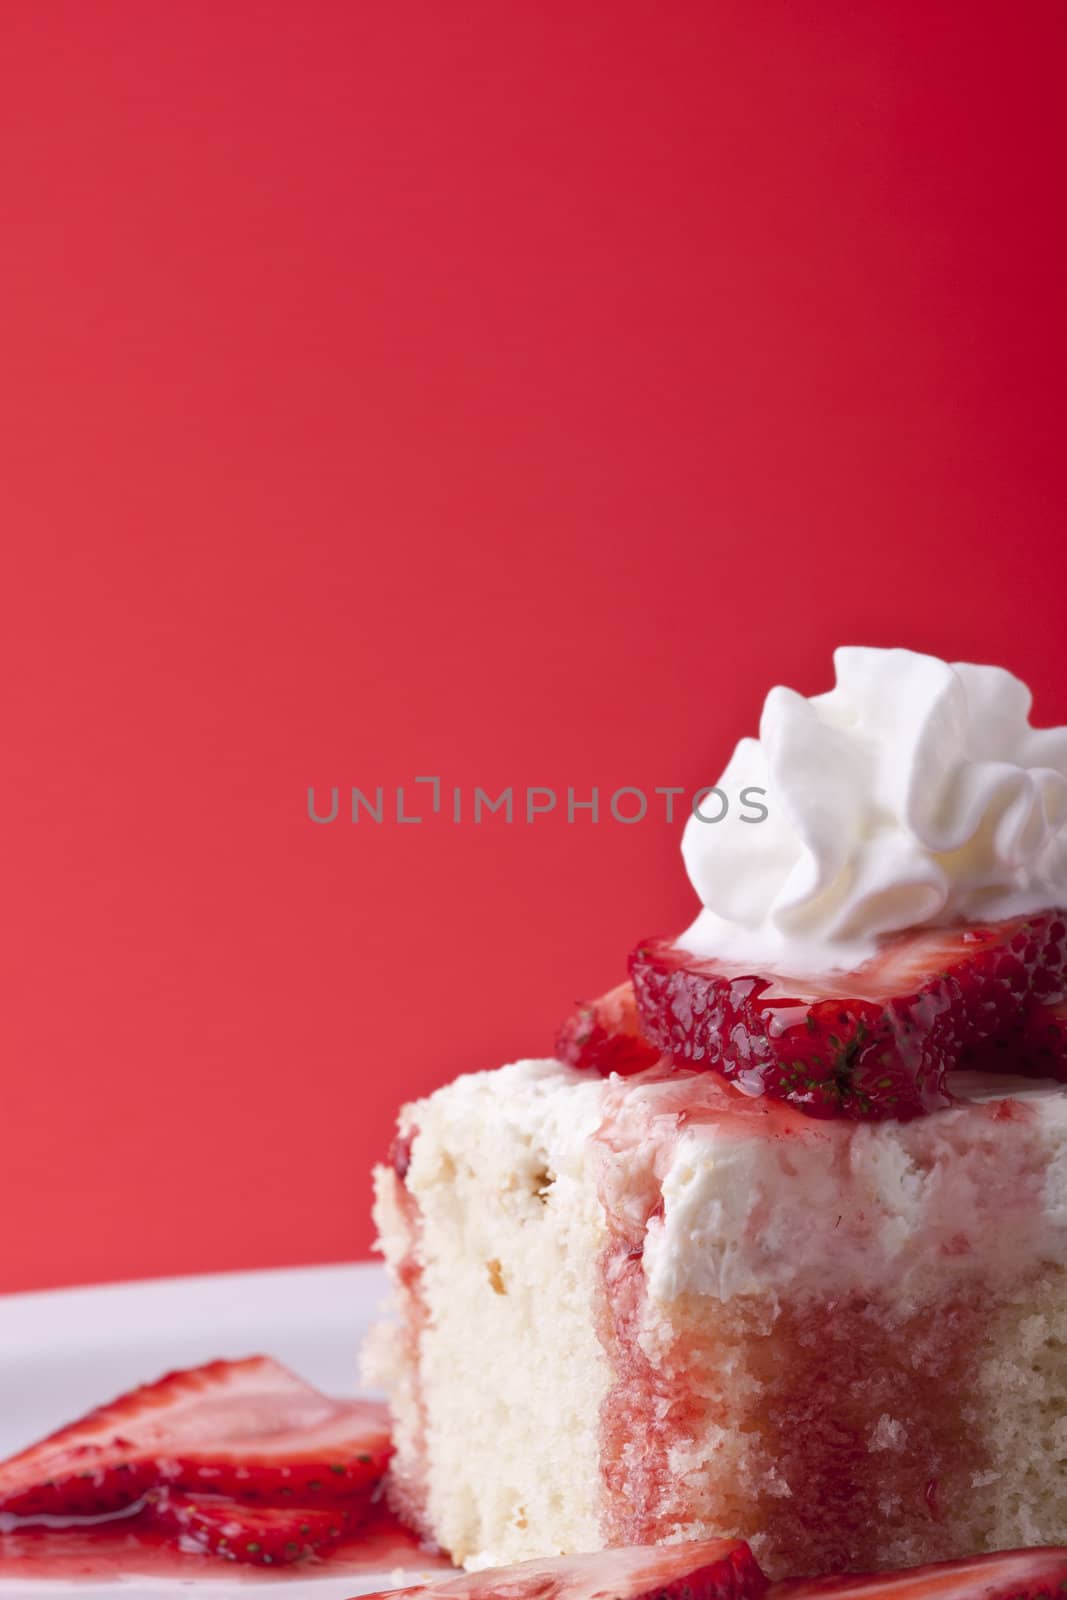 strawberry shortcake by snokid